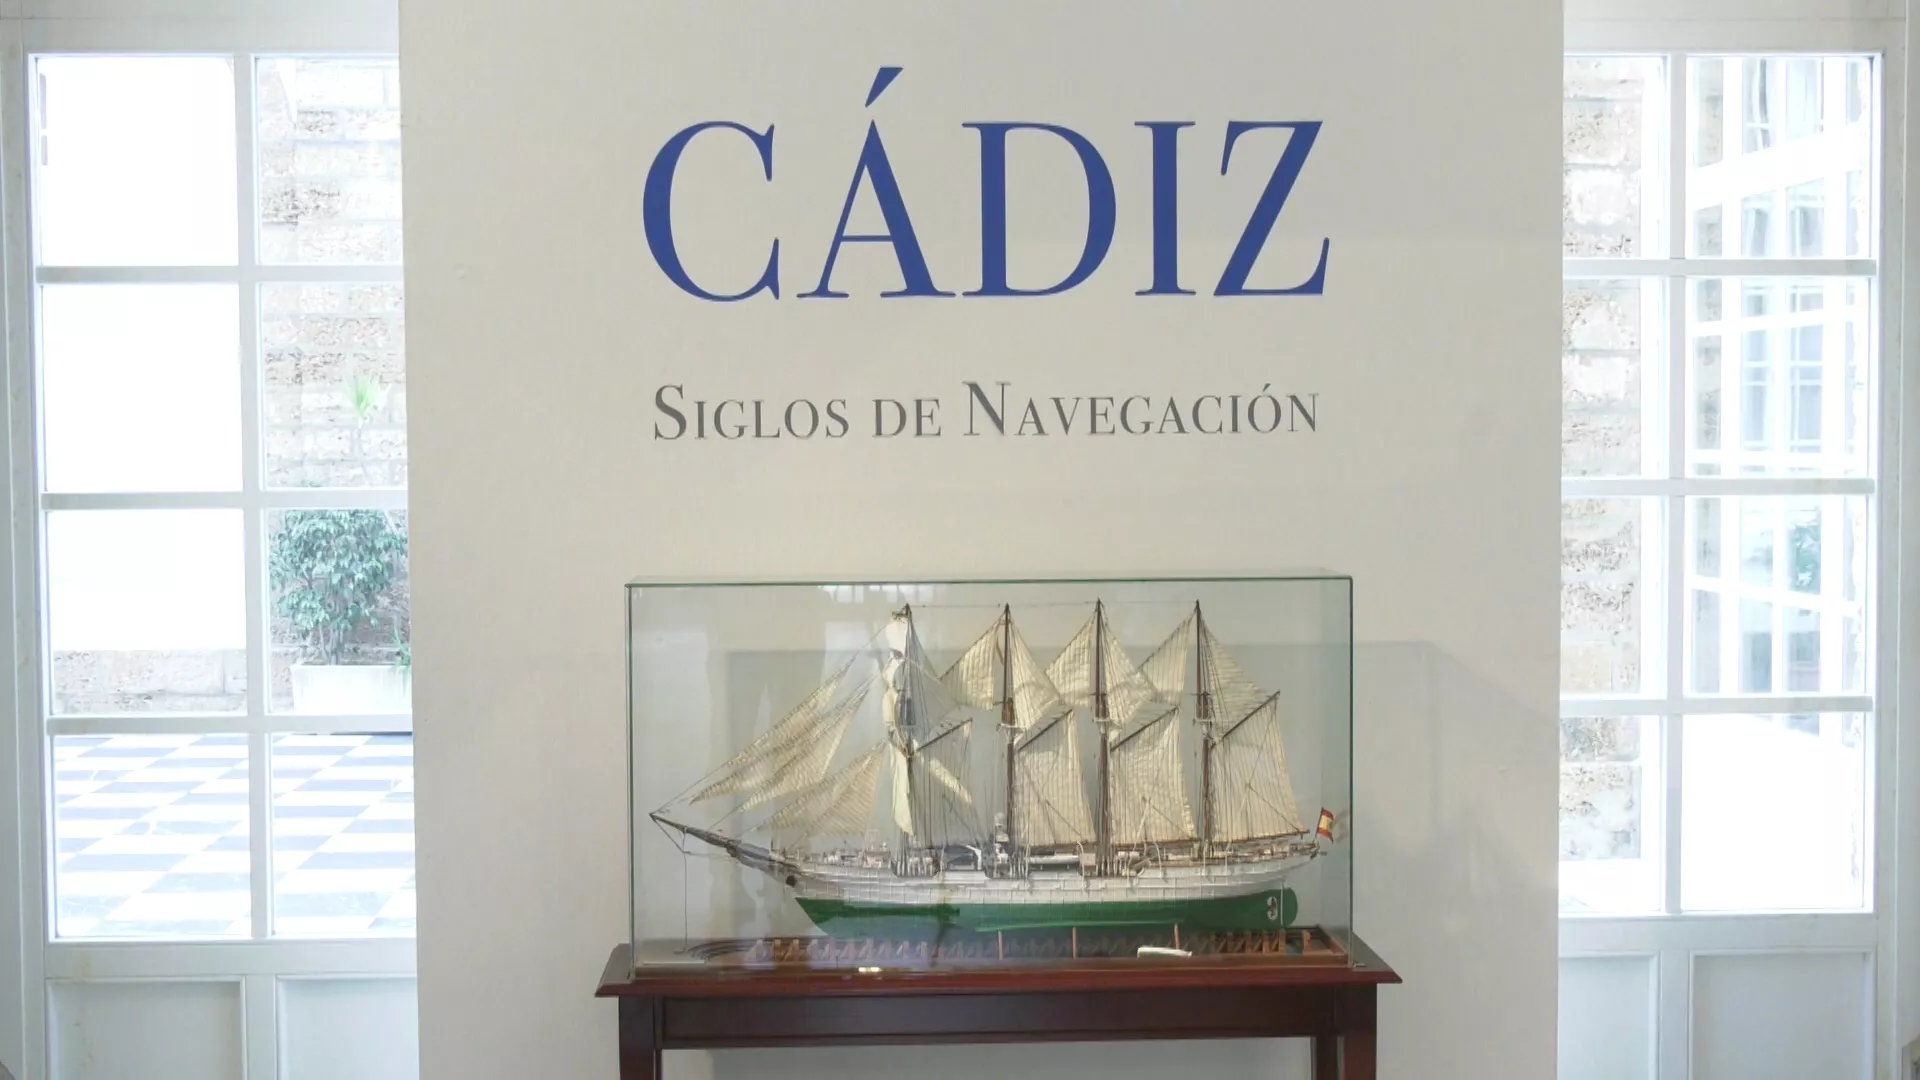 La Diputación expone “Cádiz siglos de navegación”